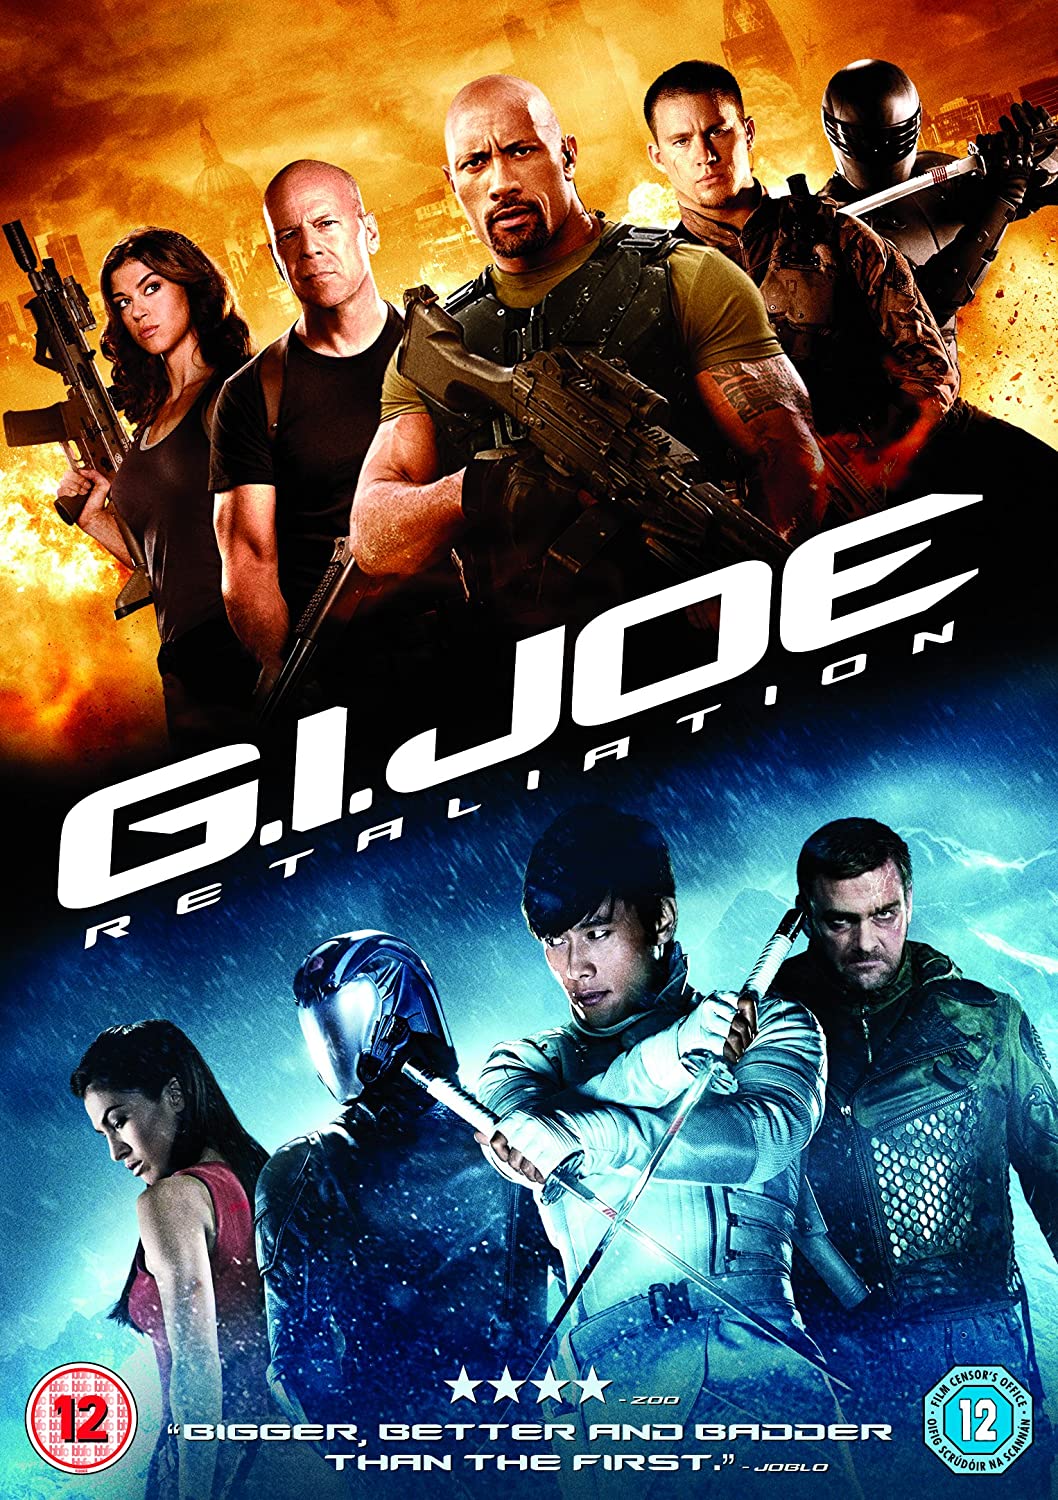 G.I. Joe: Retaliation - Action/Adventure [DVD]